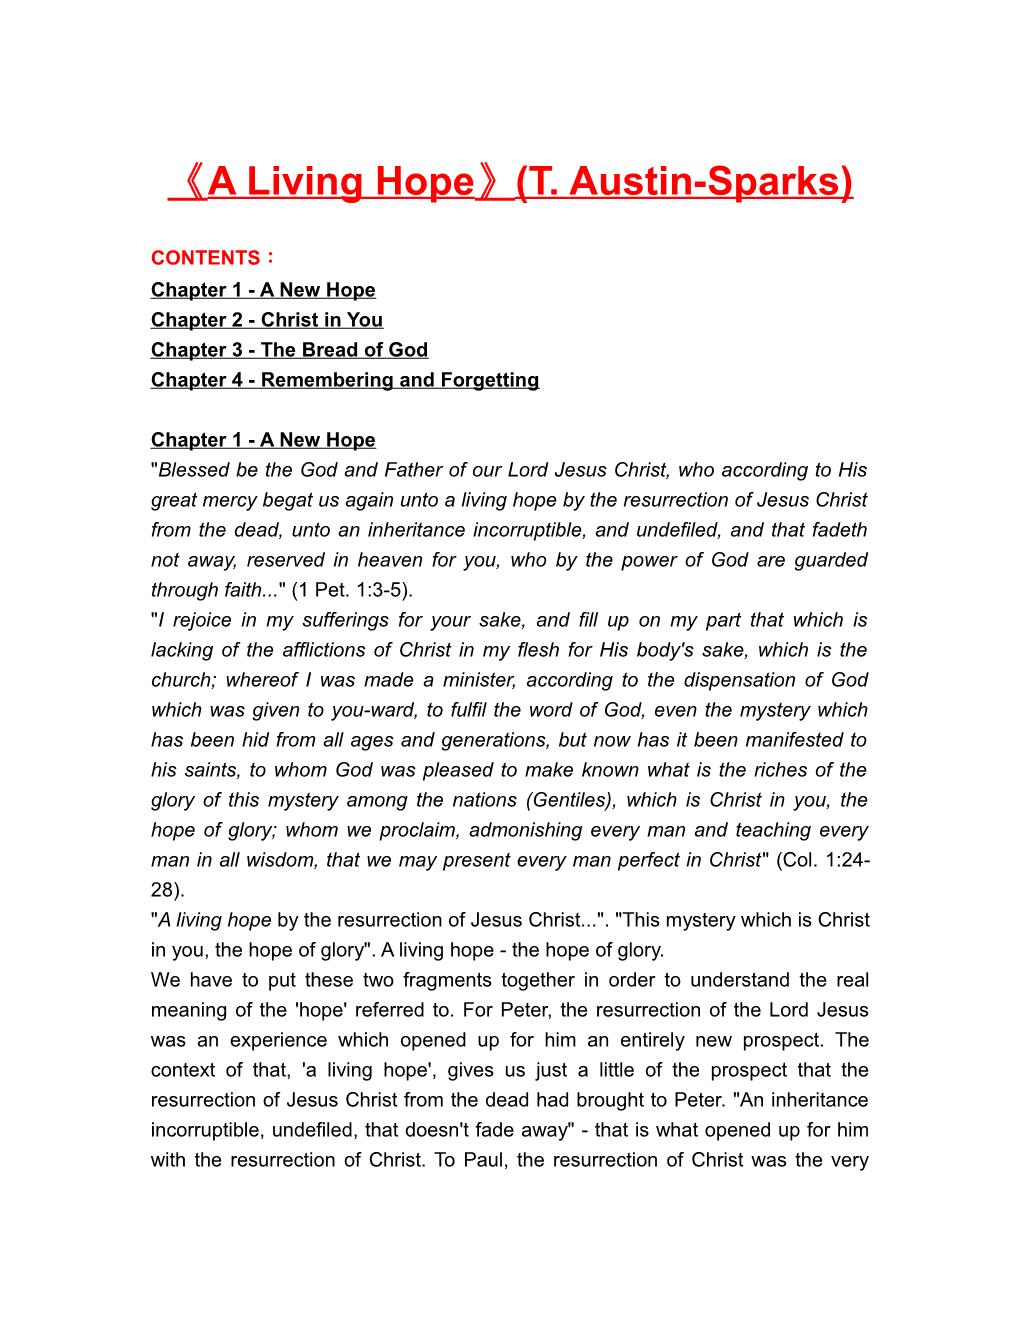 A Living Hope (T. Austin-Sparks)